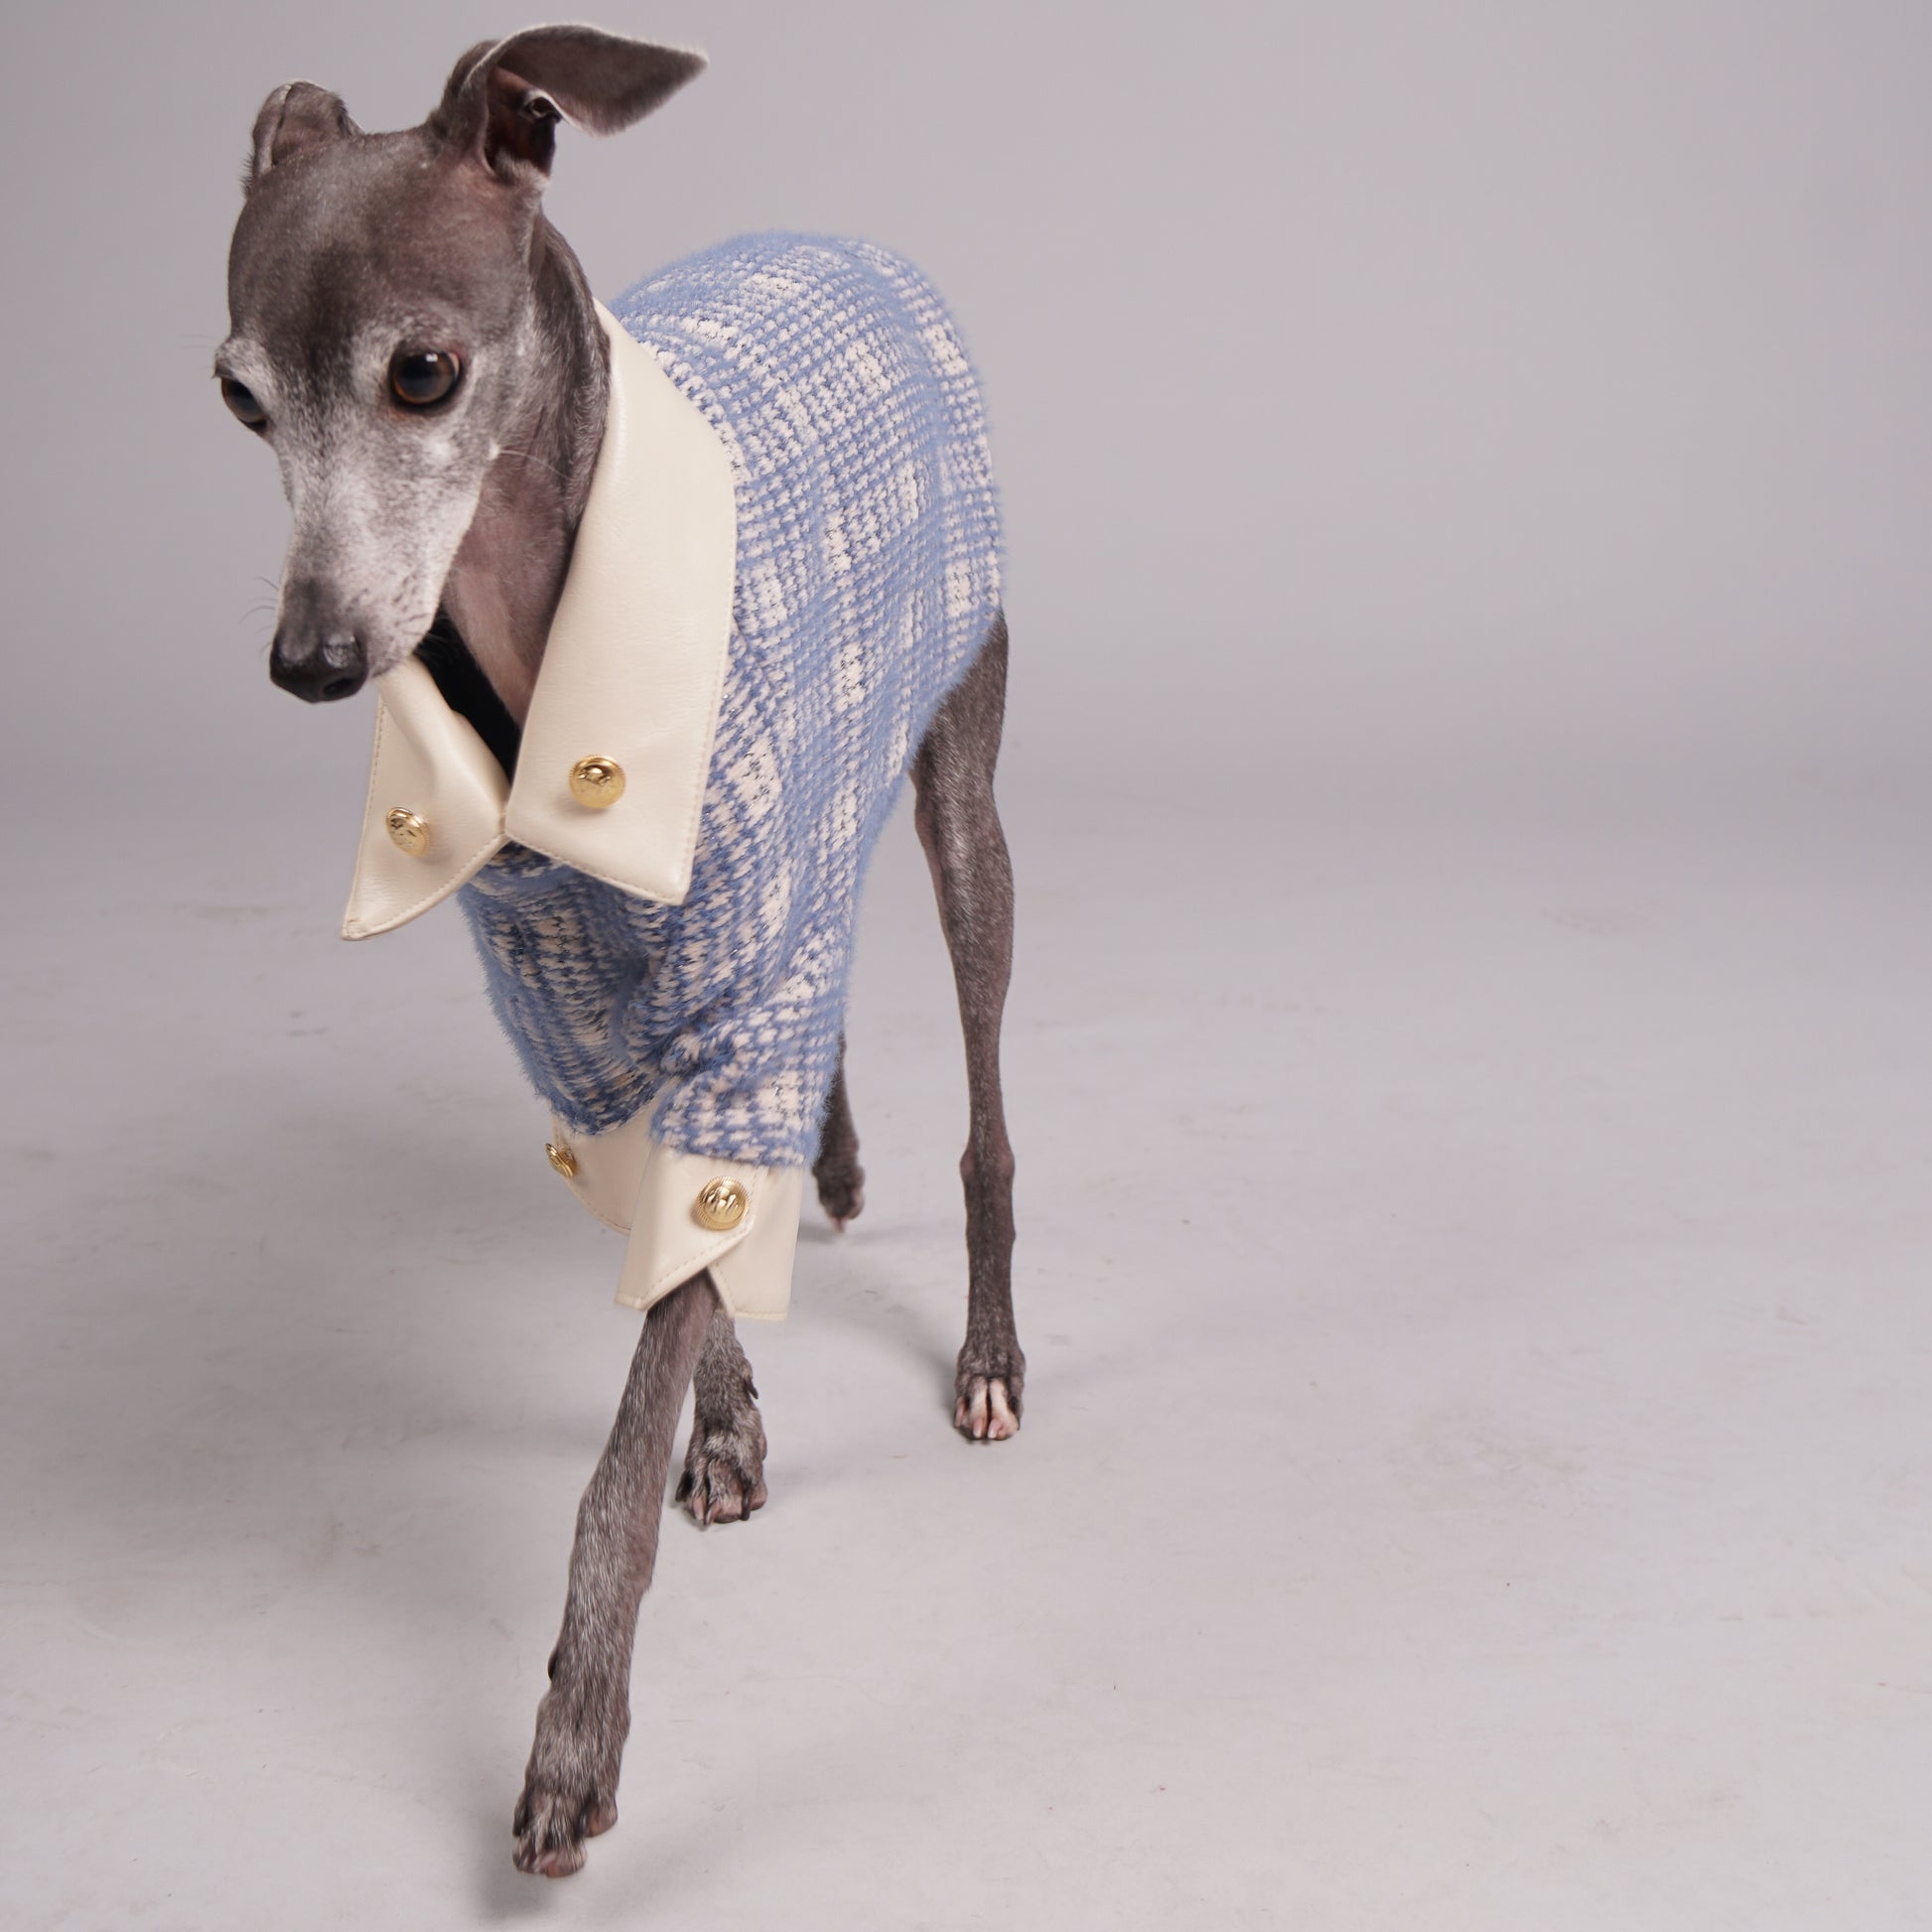 Pet clothing, Pet fashion, luxury dog clothing, luxury dog fashion, knitted jumper for Italian Greyhounds and Whippets.